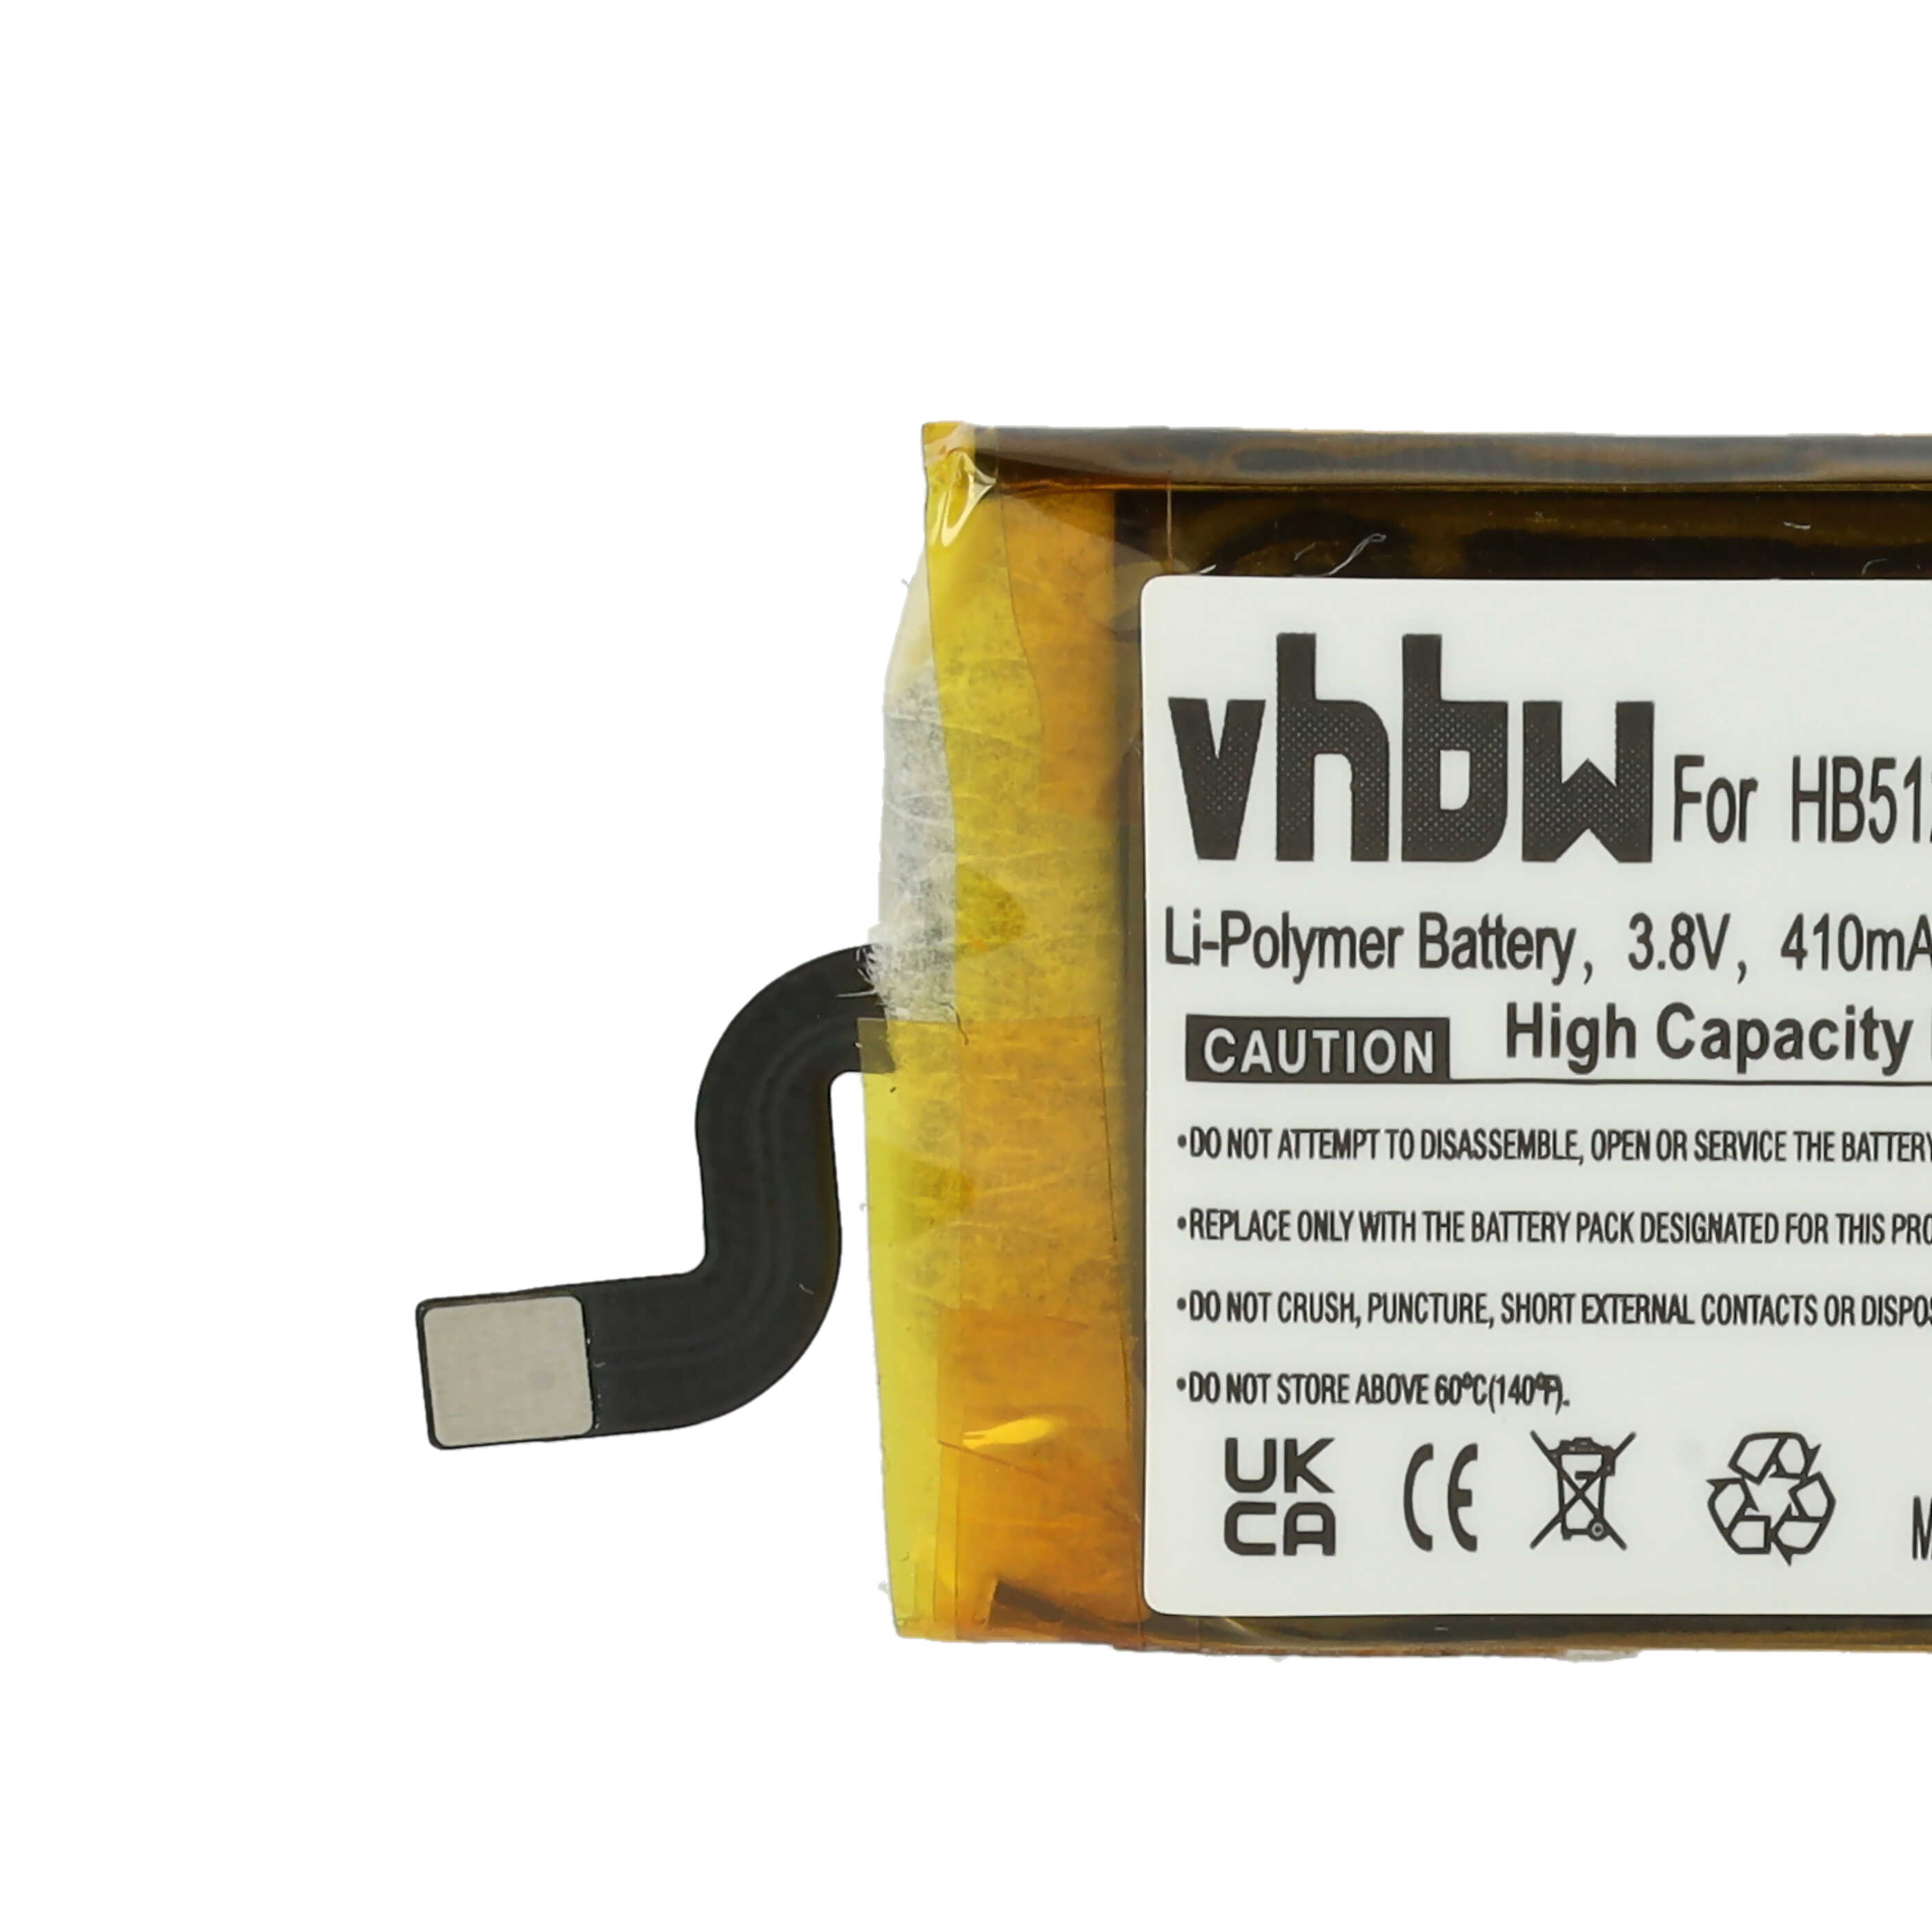 Batería reemplaza Huawei HB512627ECW para smartwatch Huawei - 410 mAh 3,8 V Li-poli + herramientas